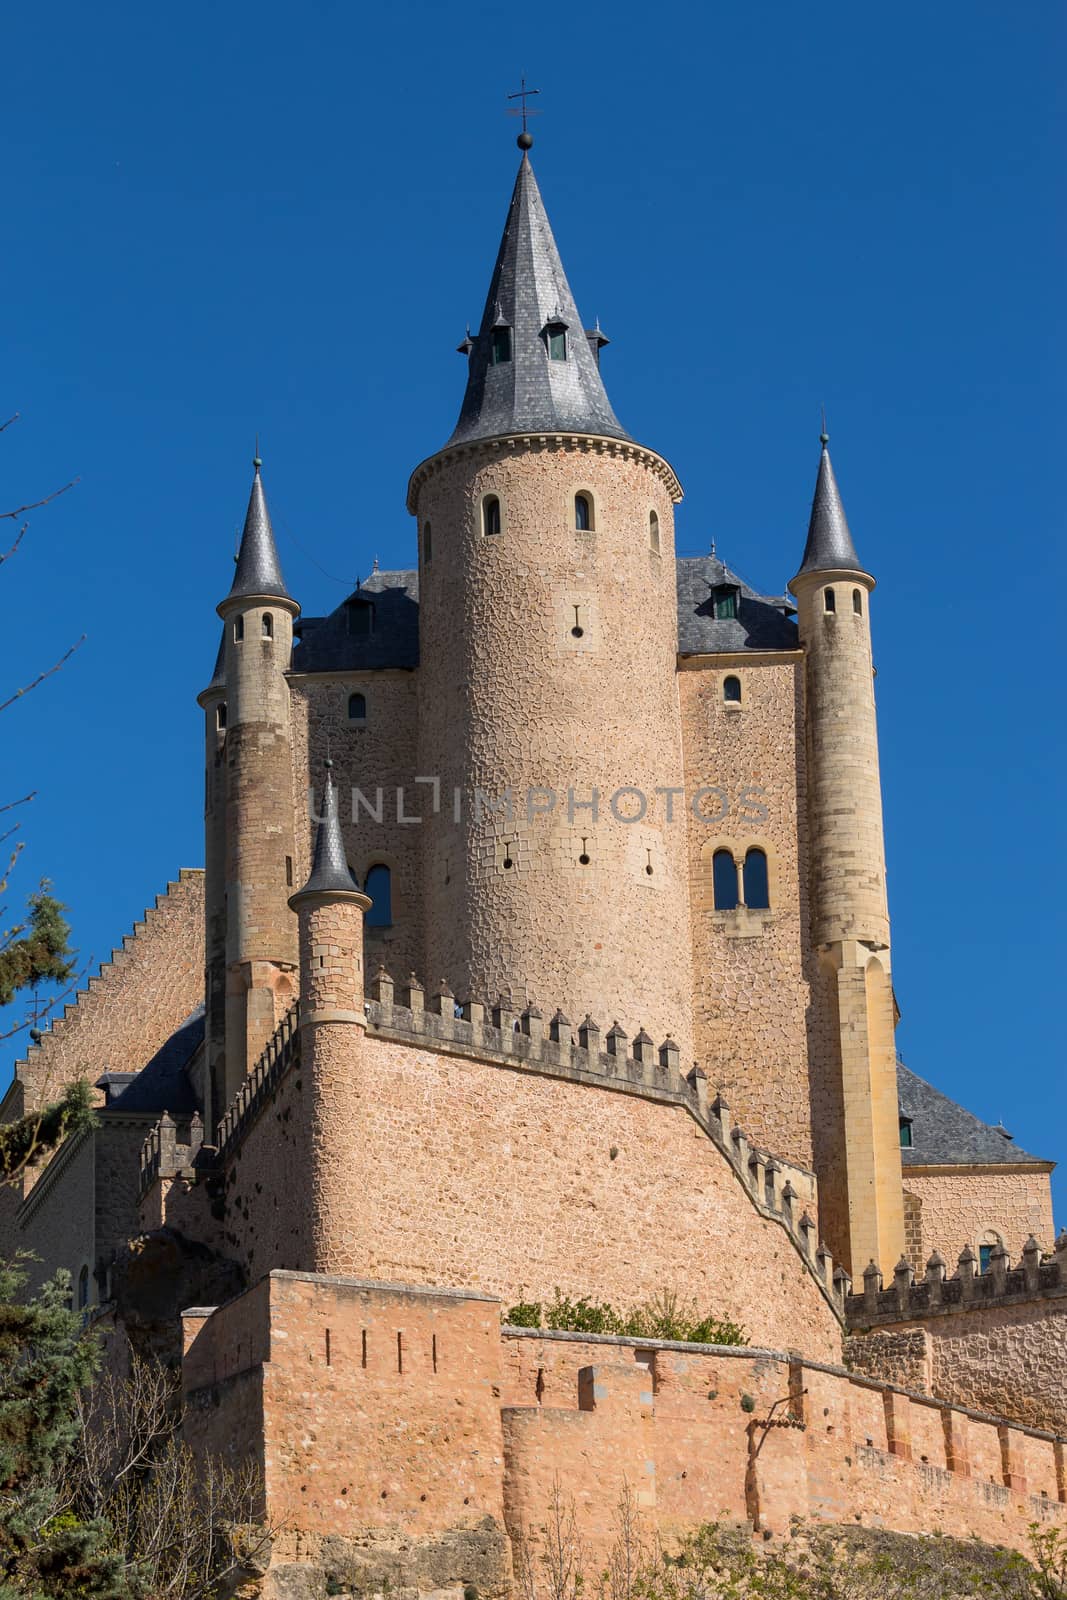 The famous Alcazar castle of Segovia, Castilla y Leon, Spain